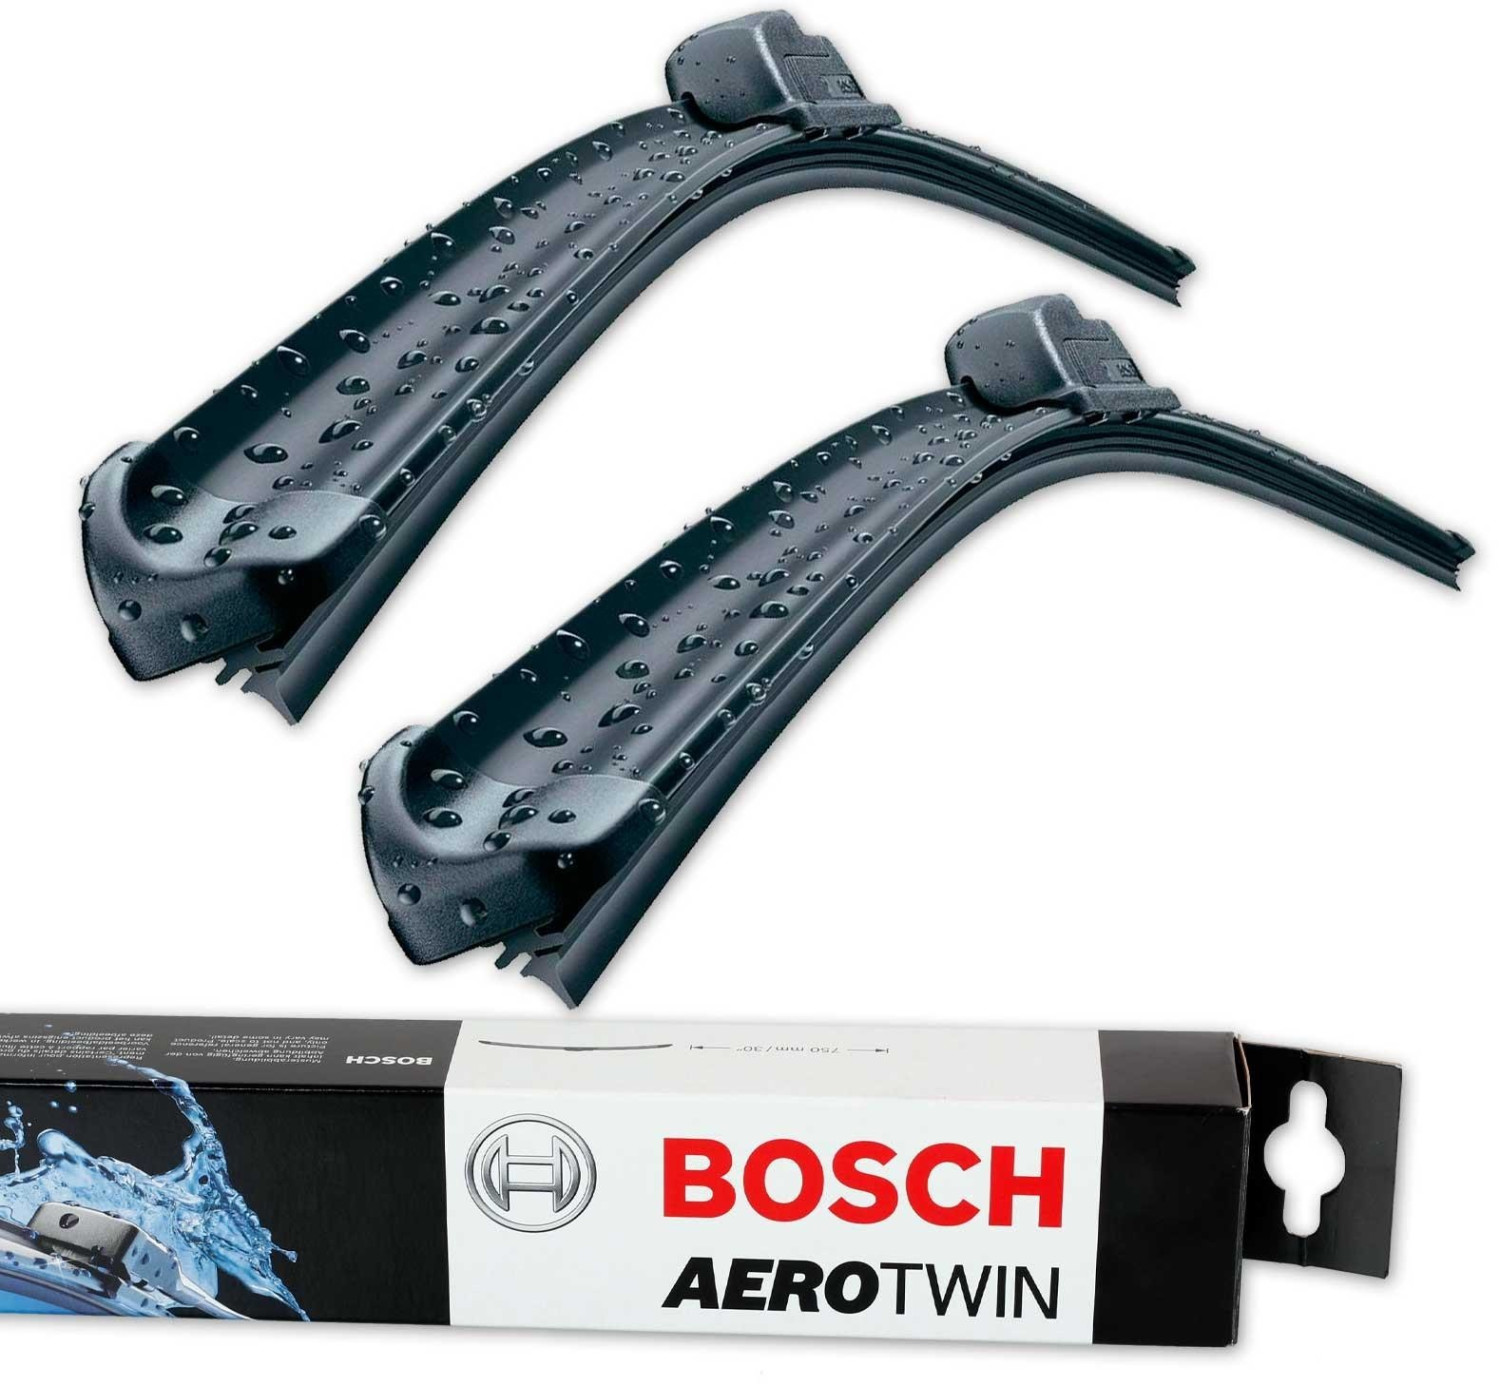 Bosch Aerotwin A 214 S ab 18,24 €